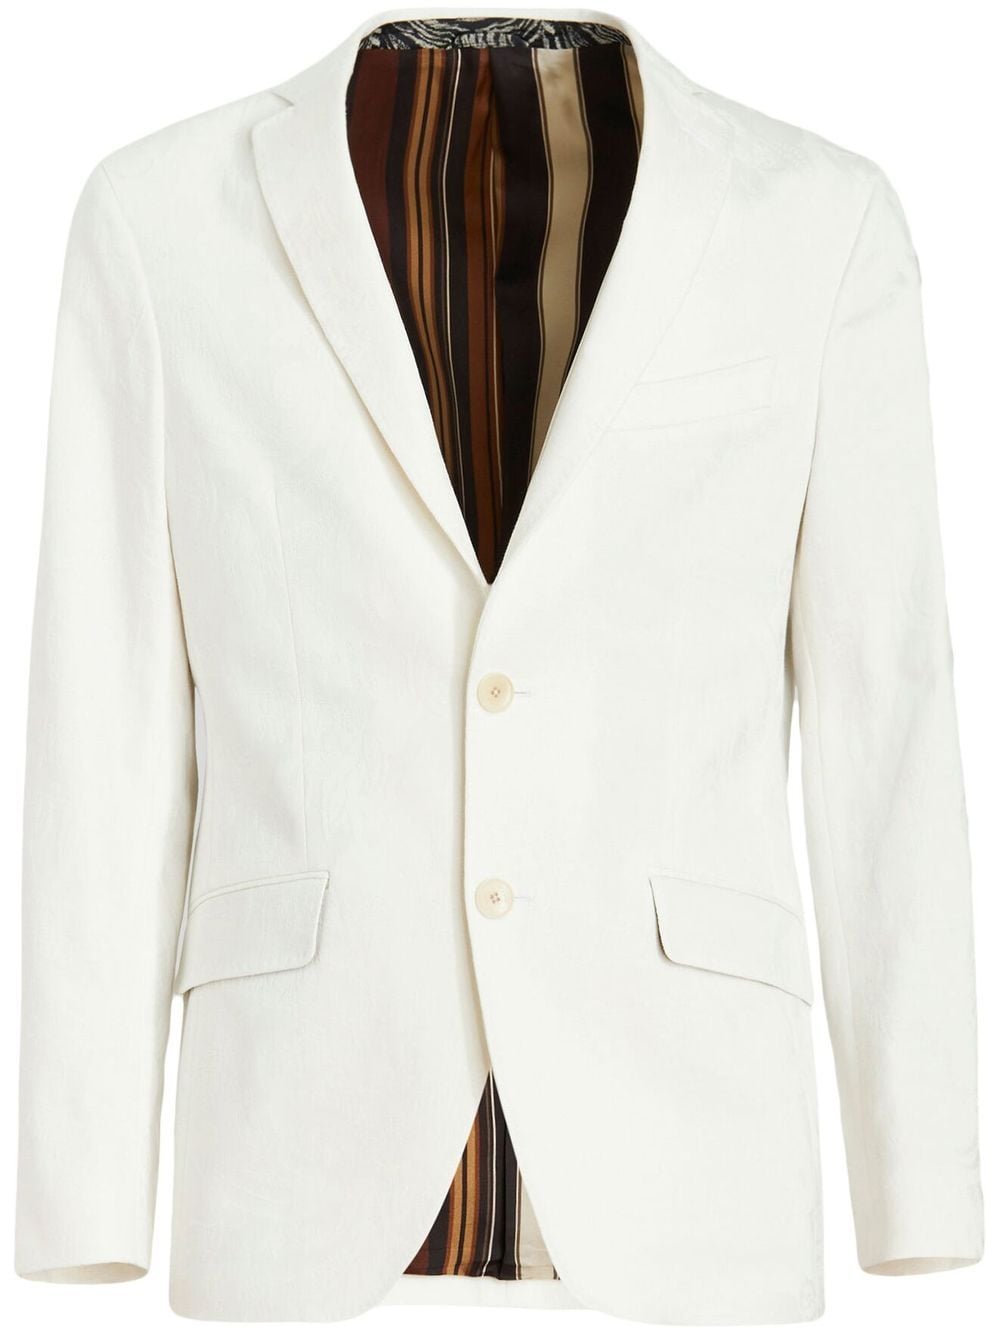 ETRO patterned-jacquard single-breasted blazer - White von ETRO